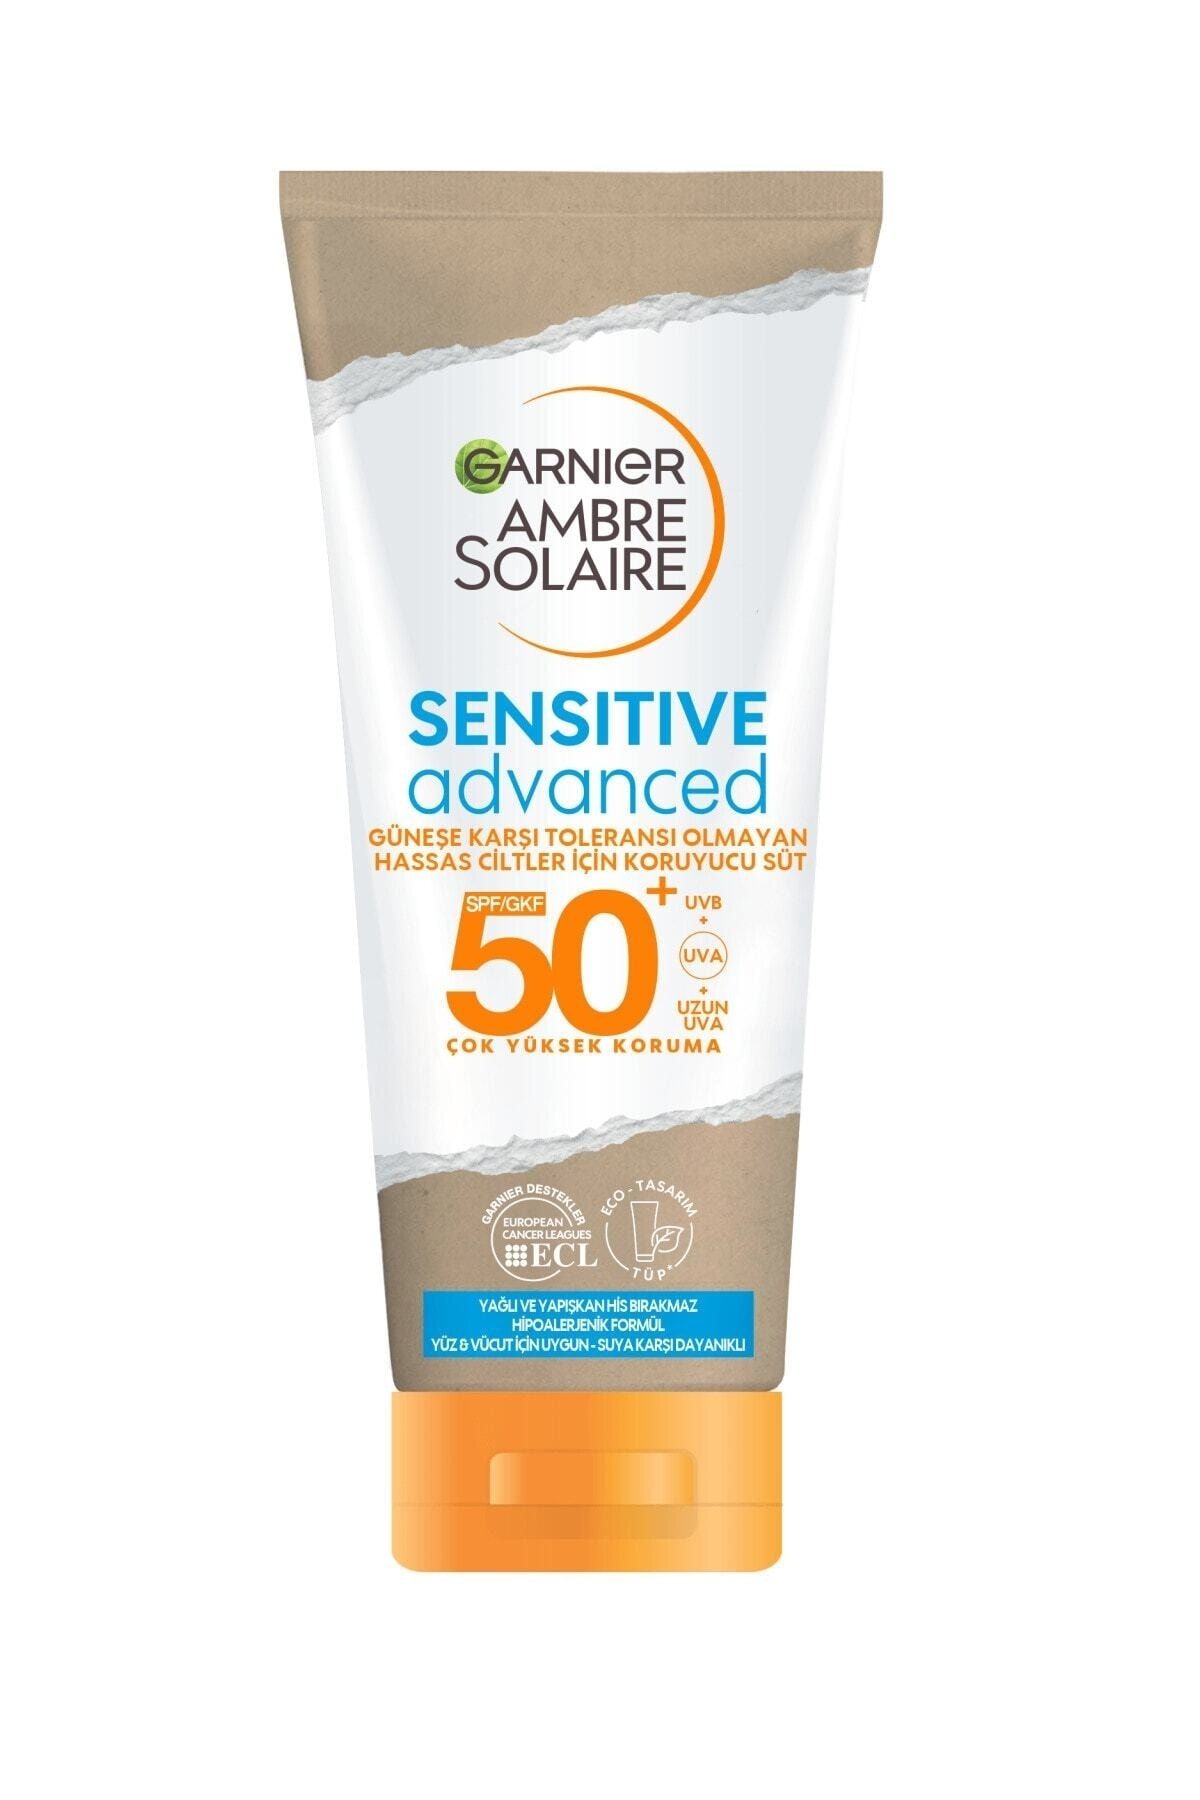 Garnier محافظت کننده آفتابی پوست حساس آمبره سولاریه مقاوم در برابر آب GKF50+ 200 میلی لیتر